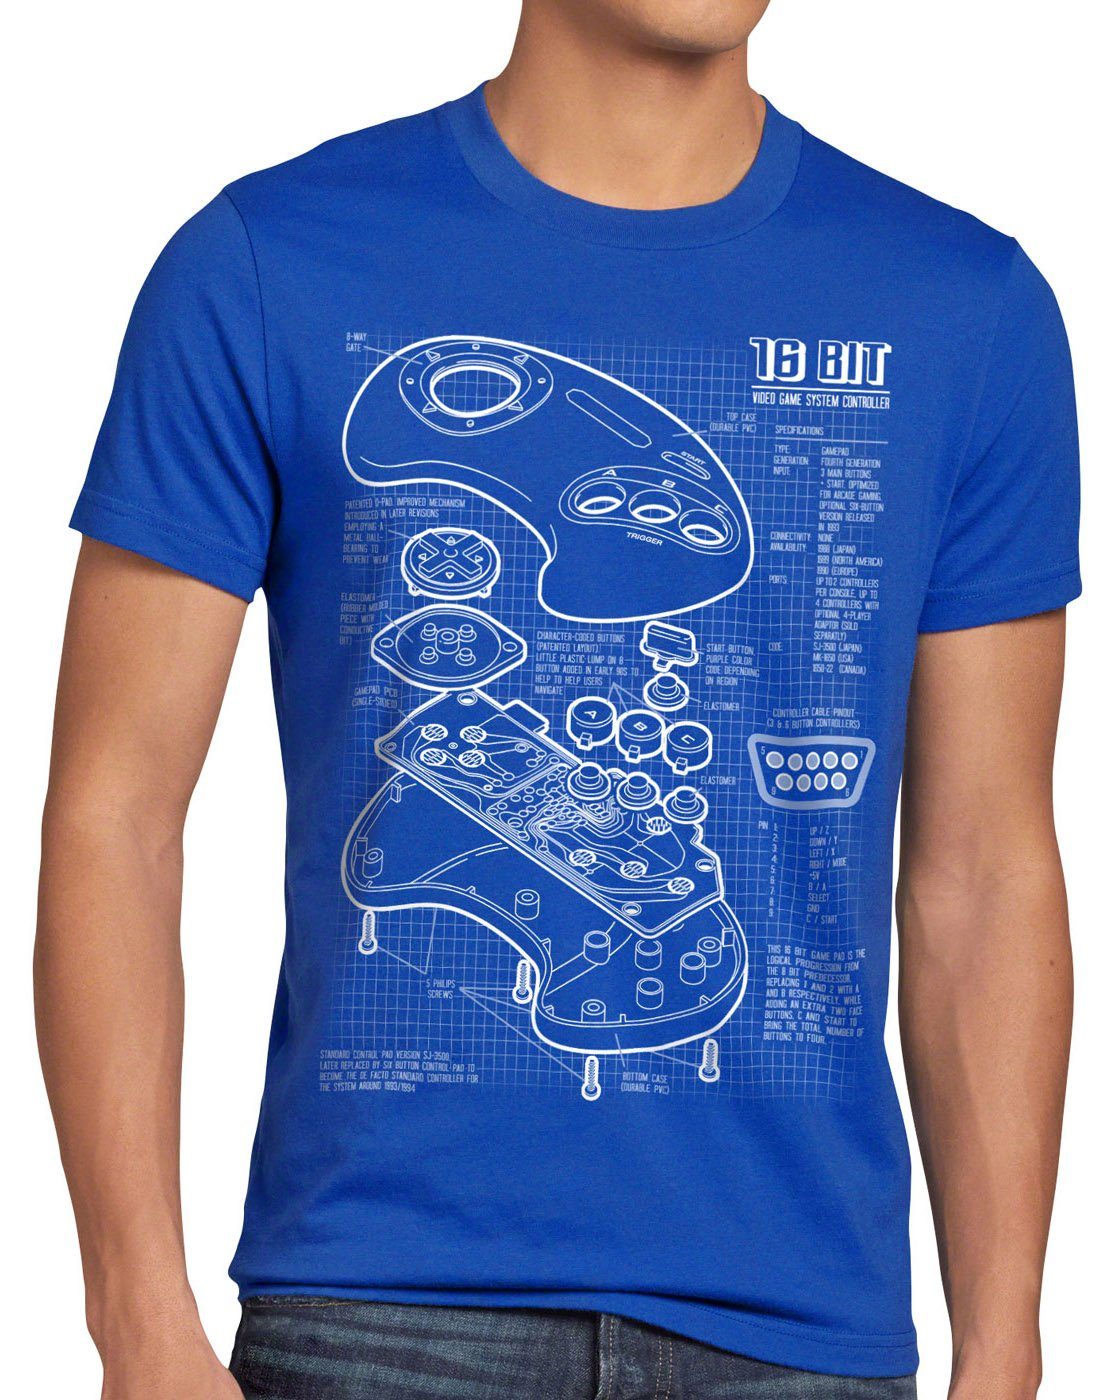 style3 Print-Shirt Herren Mega gamer md Konsole T-Shirt drive 16-Bit classic genesis system master blau